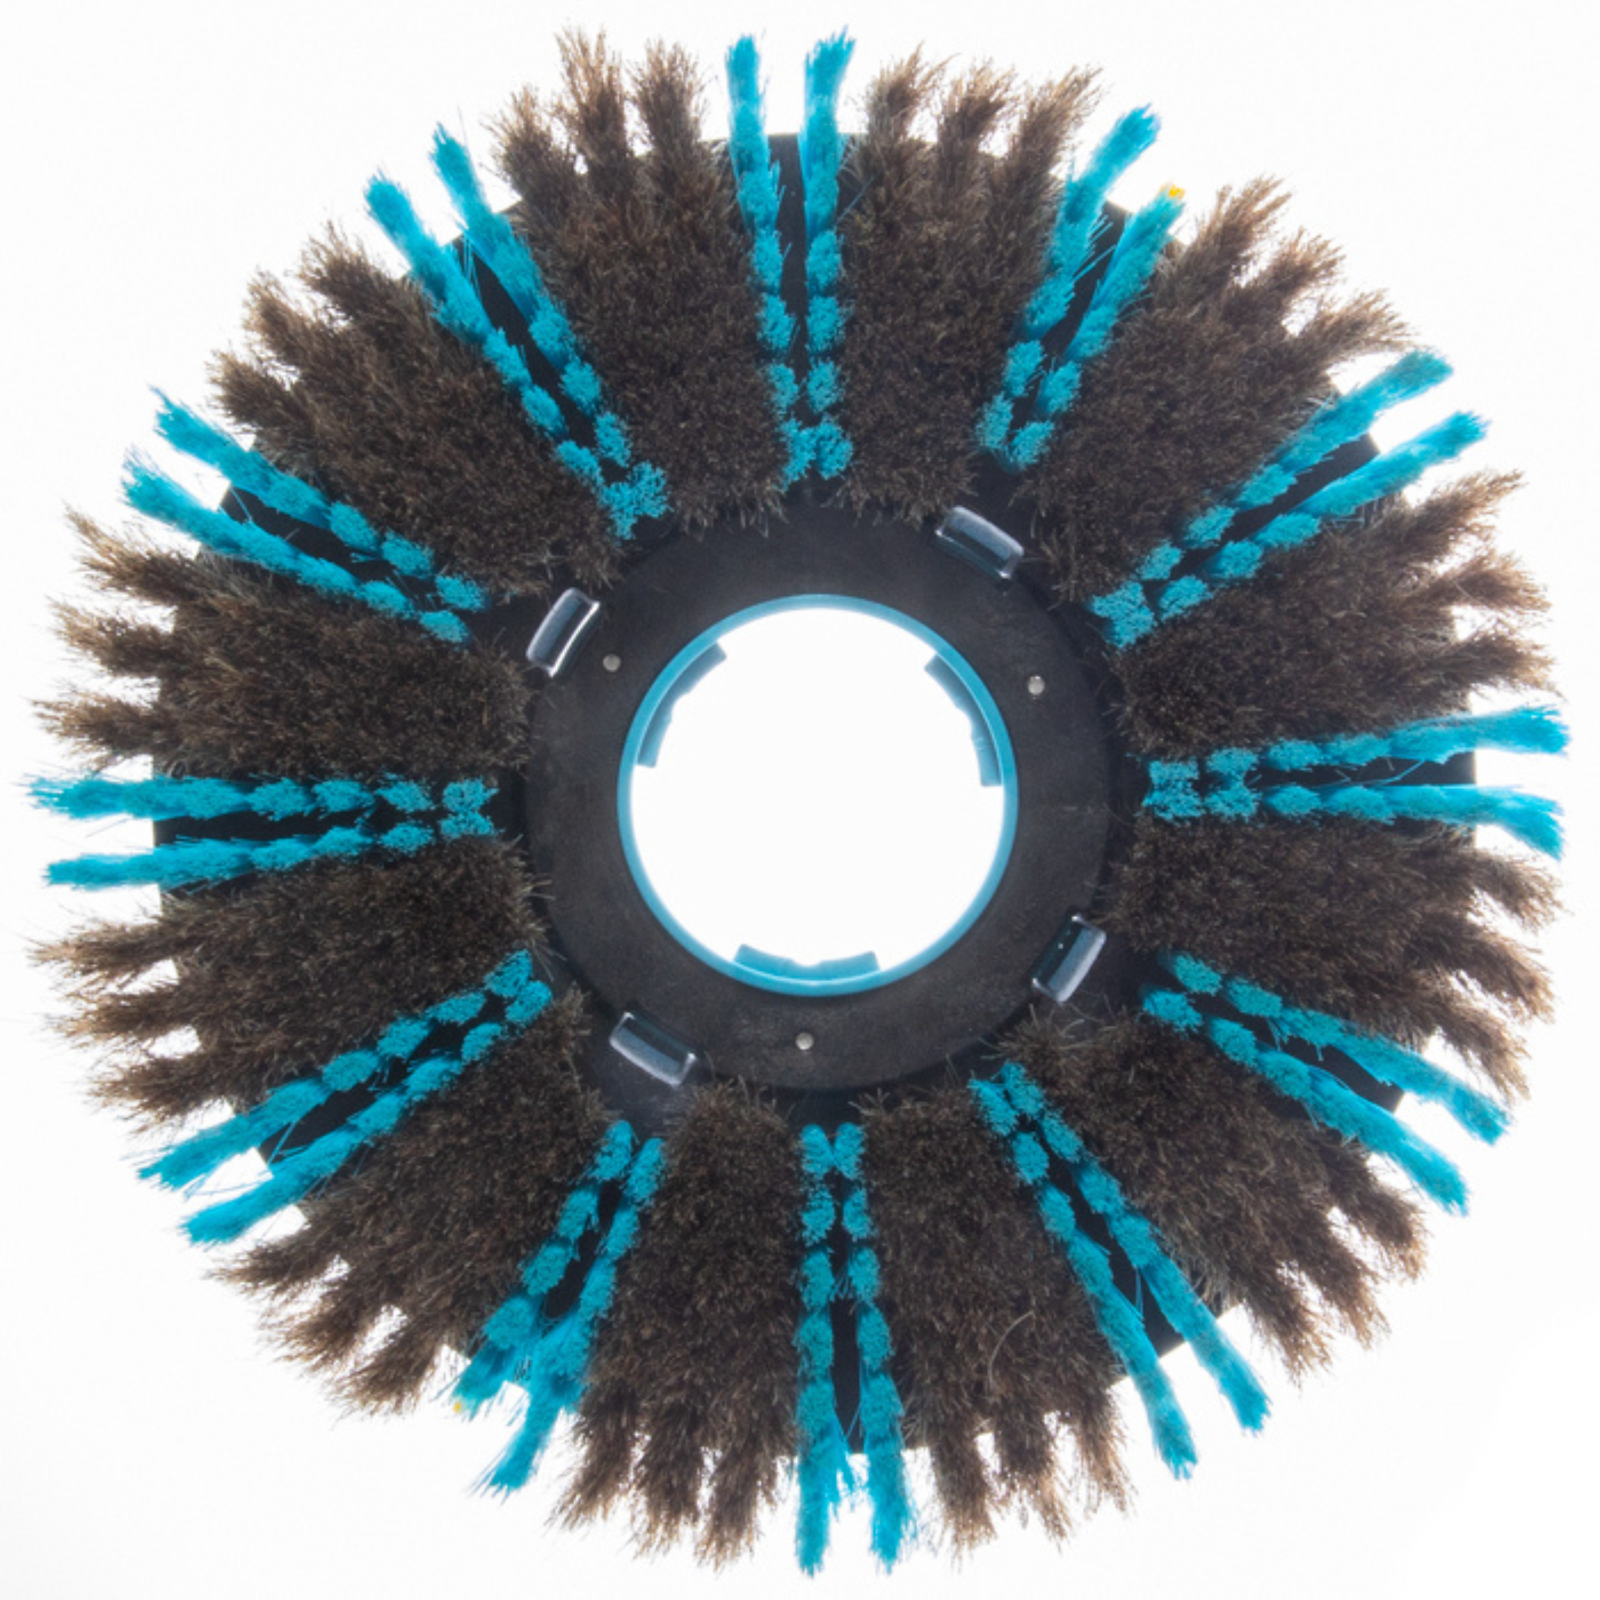 I-Mop XL Floor Brushes - Natural Hair Brush